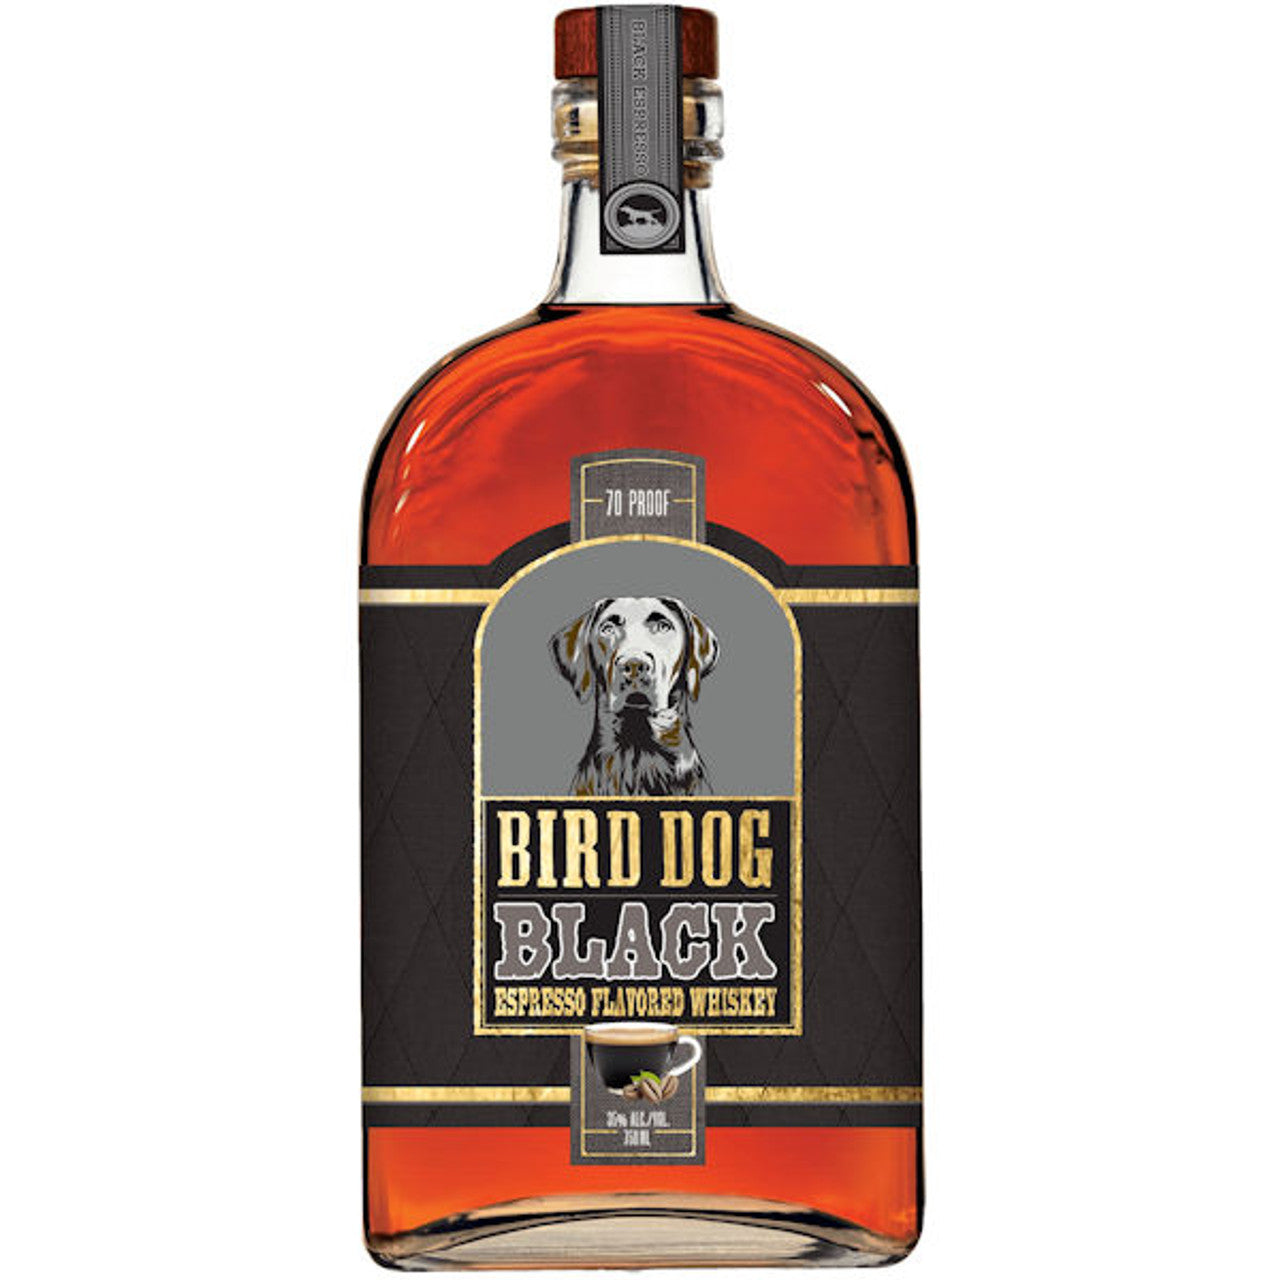 Bird Dog Black Espresso Flavored Whiskey 750ml